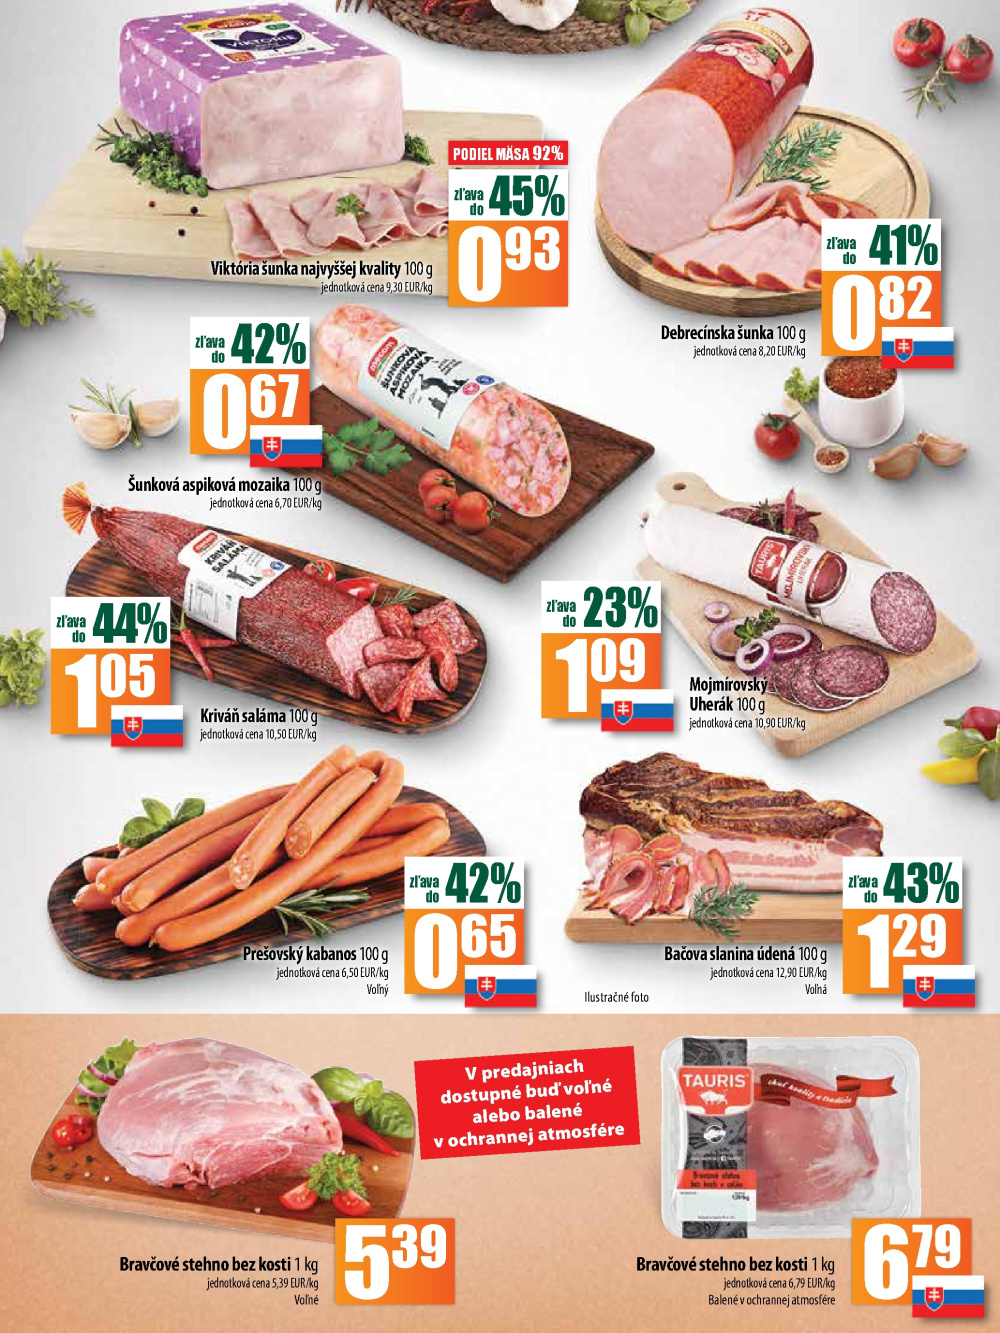 Leták Coop Jednota noviny - Supermarket, Slovensko - strana 2